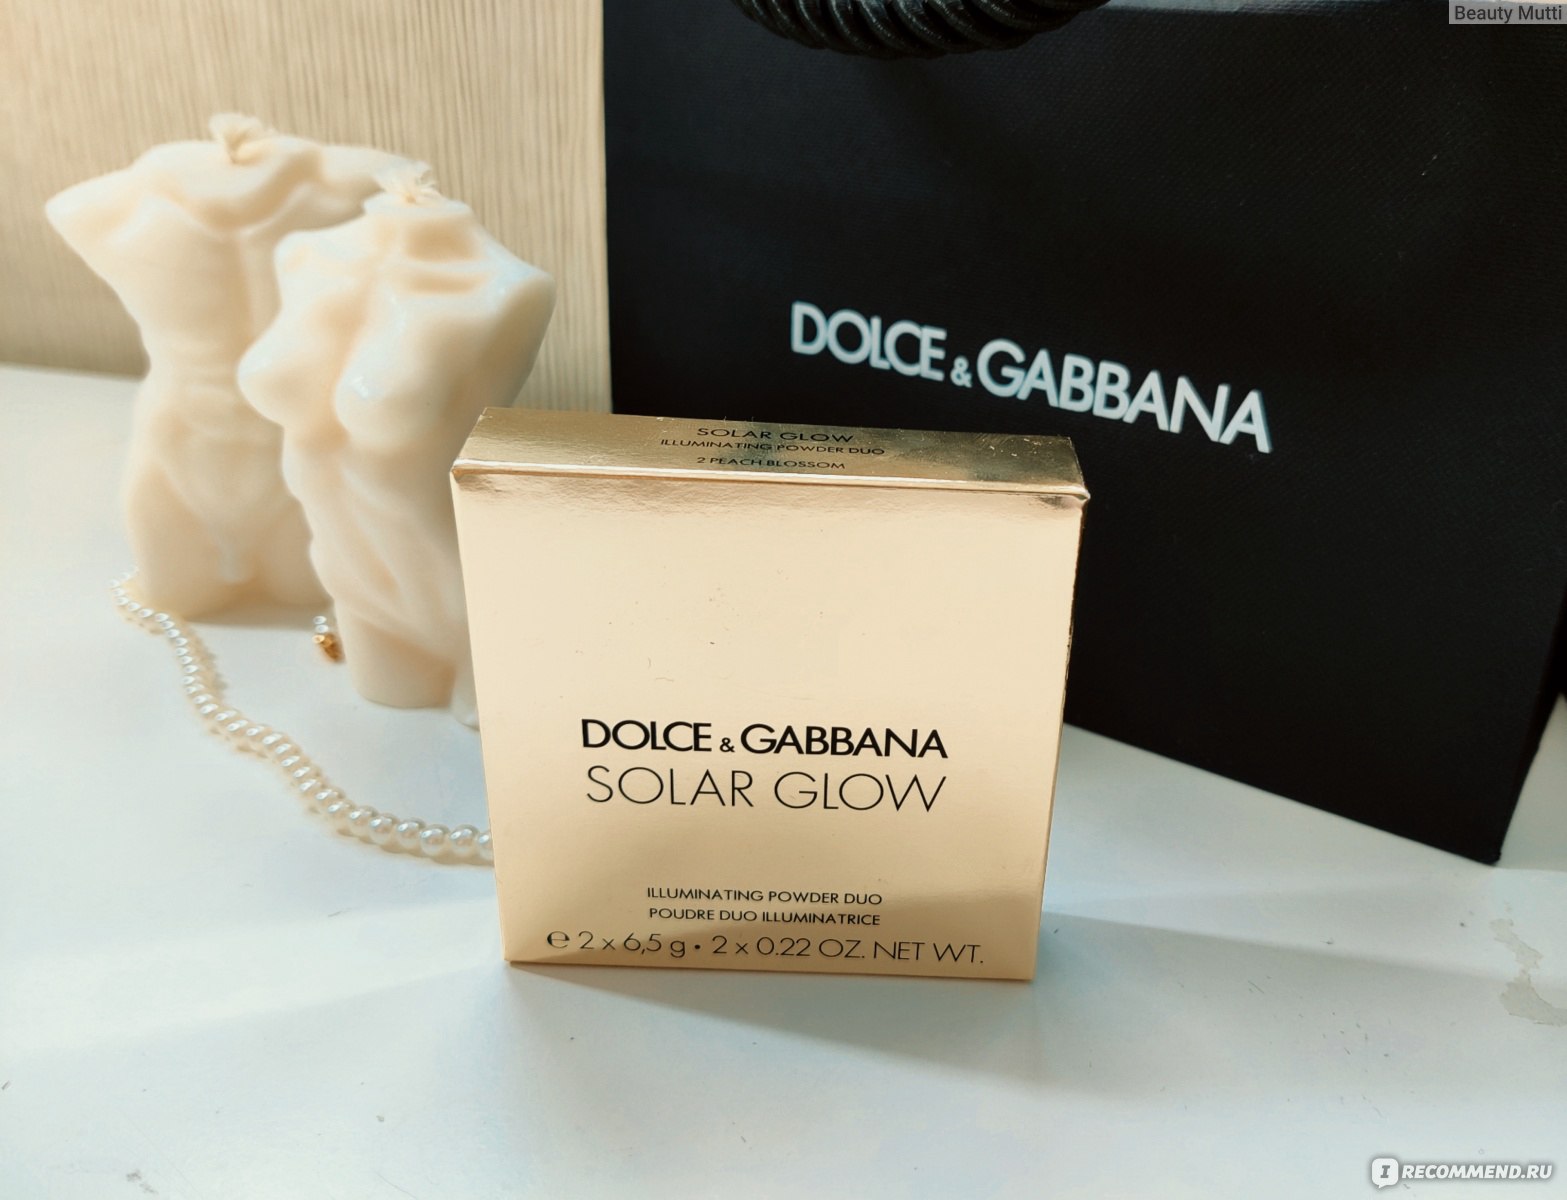 Хайлайтер дольче габбана. Румяна Dolce Gabbana Solar Glow. Румяна хайлайтер Dolce Gabbana. Dolce Gabbana Solar Glow румяна хайлайтер.